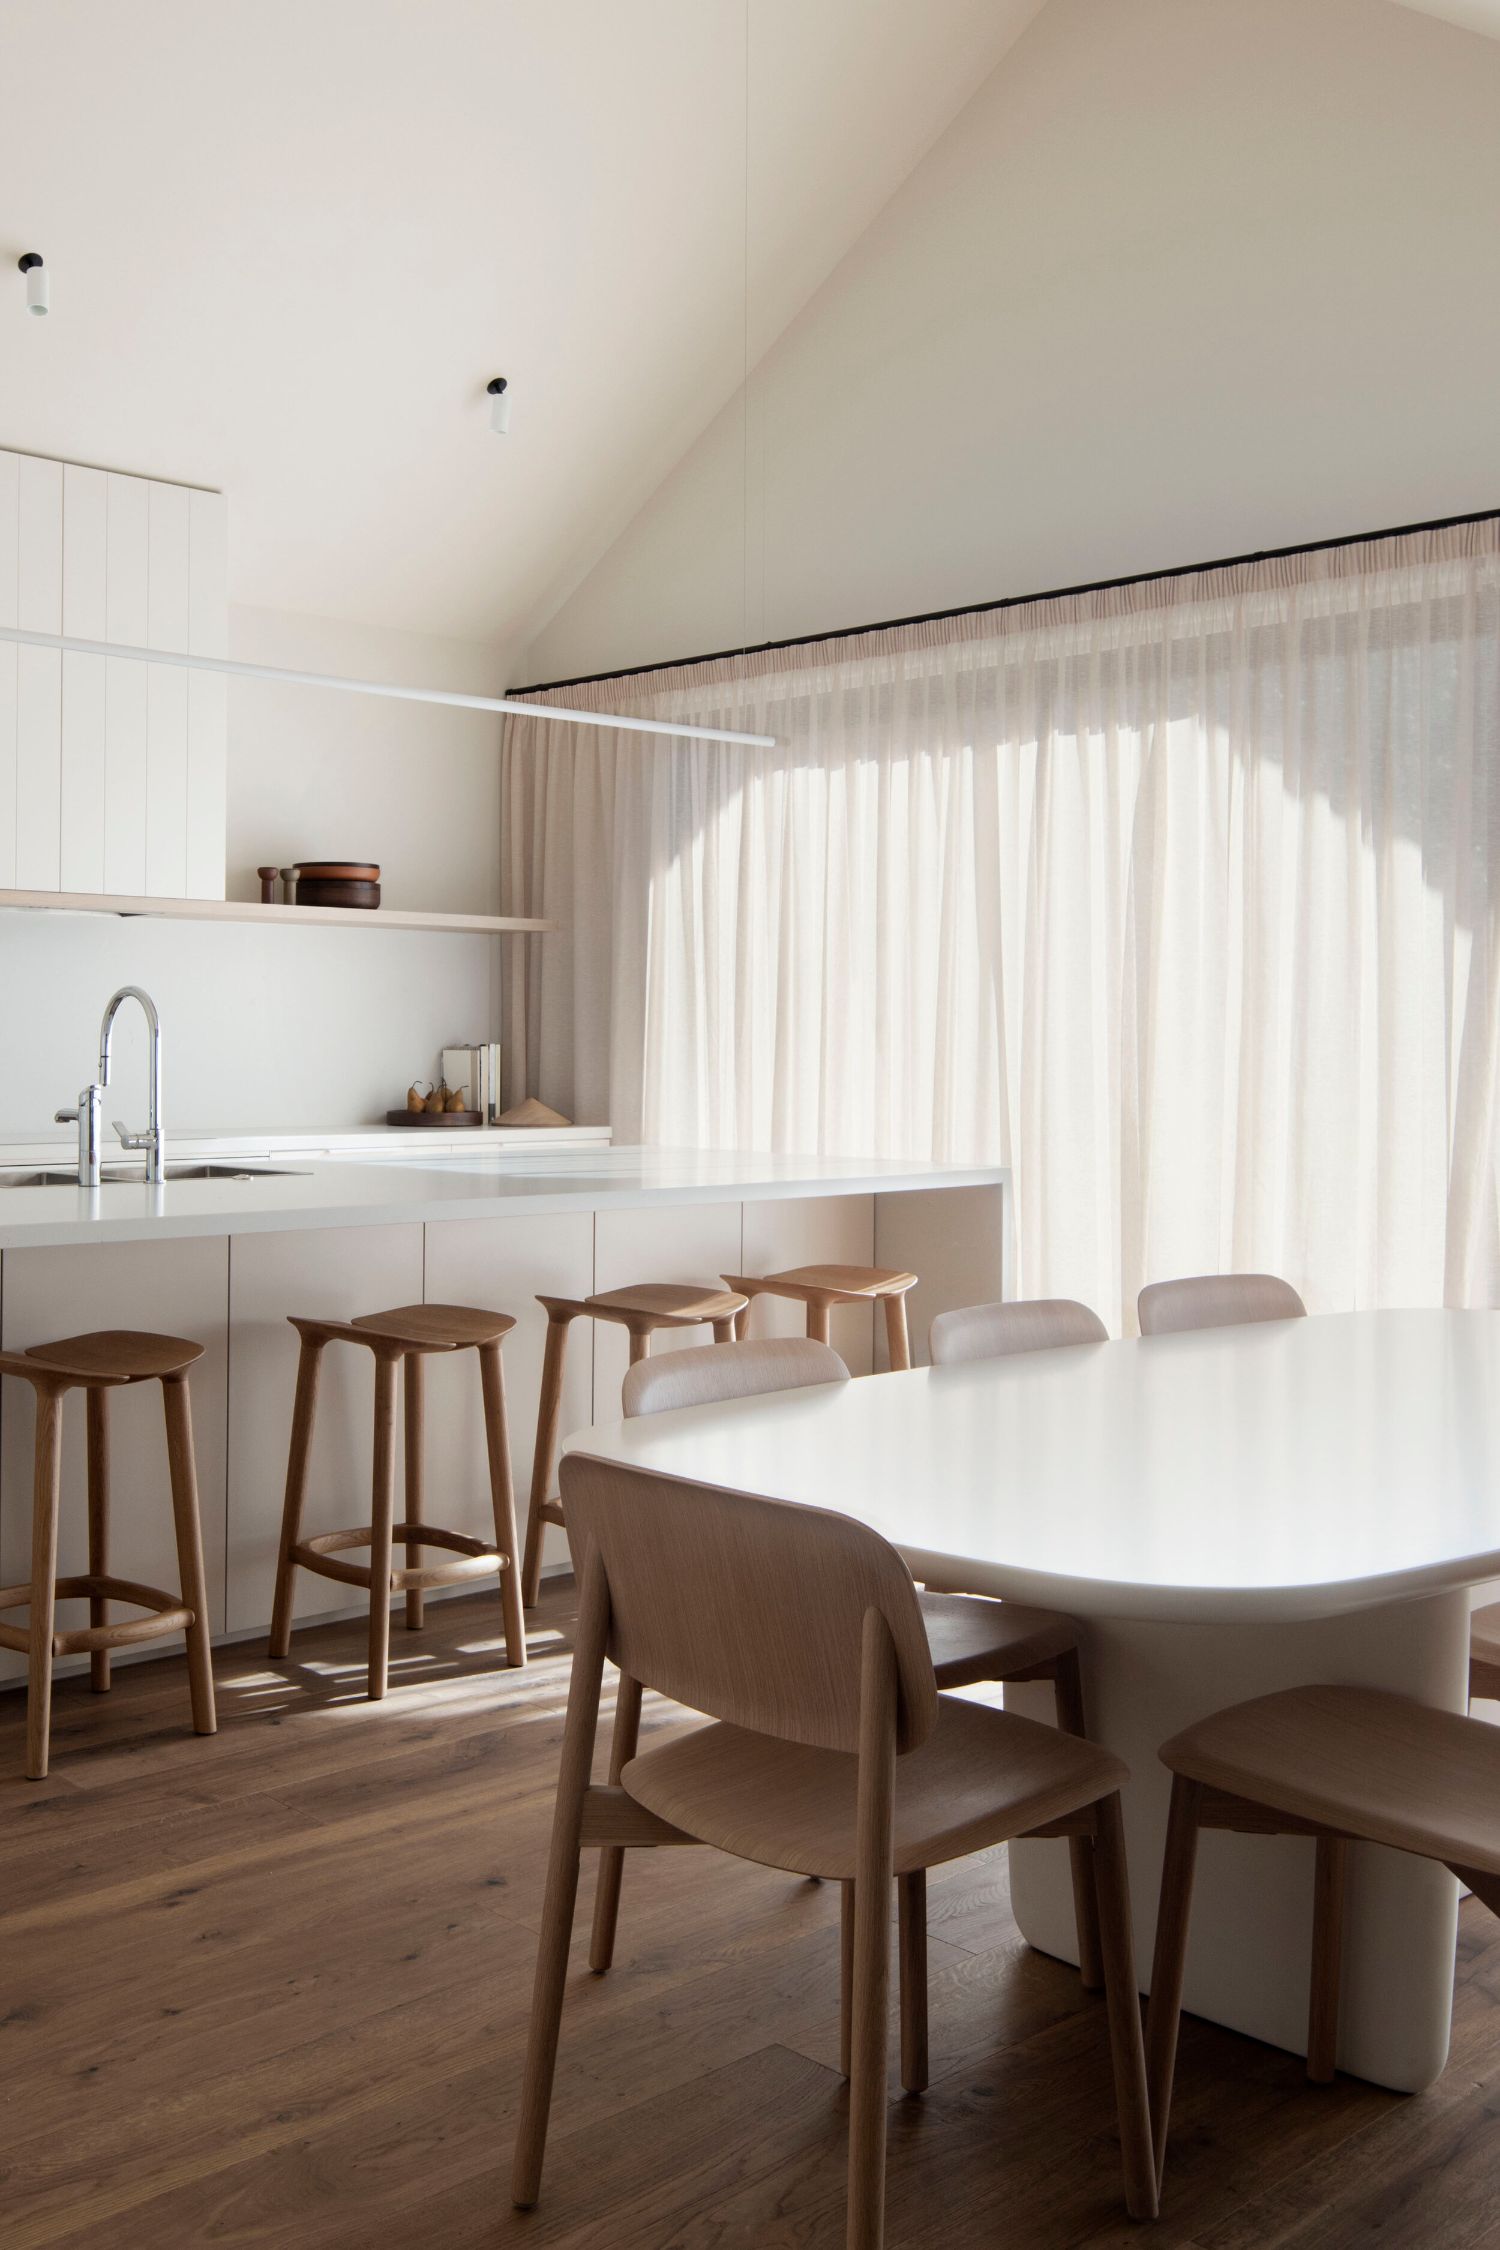 Retreat Residence in Melbourne designed by CJH Studio